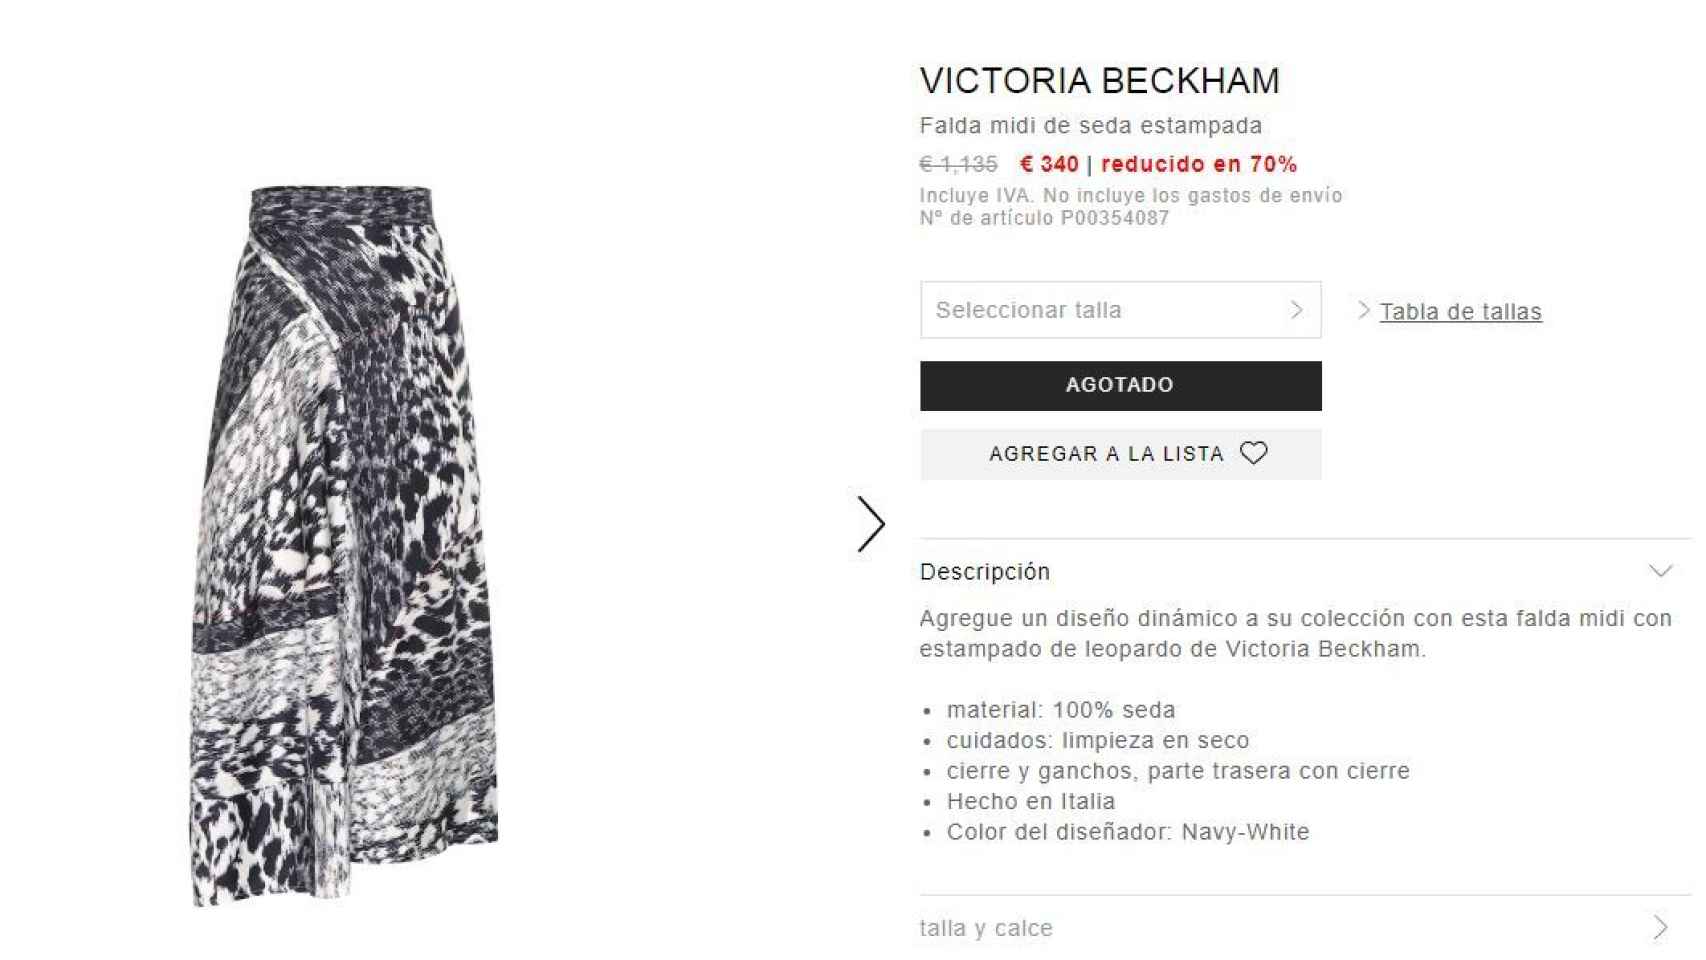 Falda de Victoria Beckham agotada.